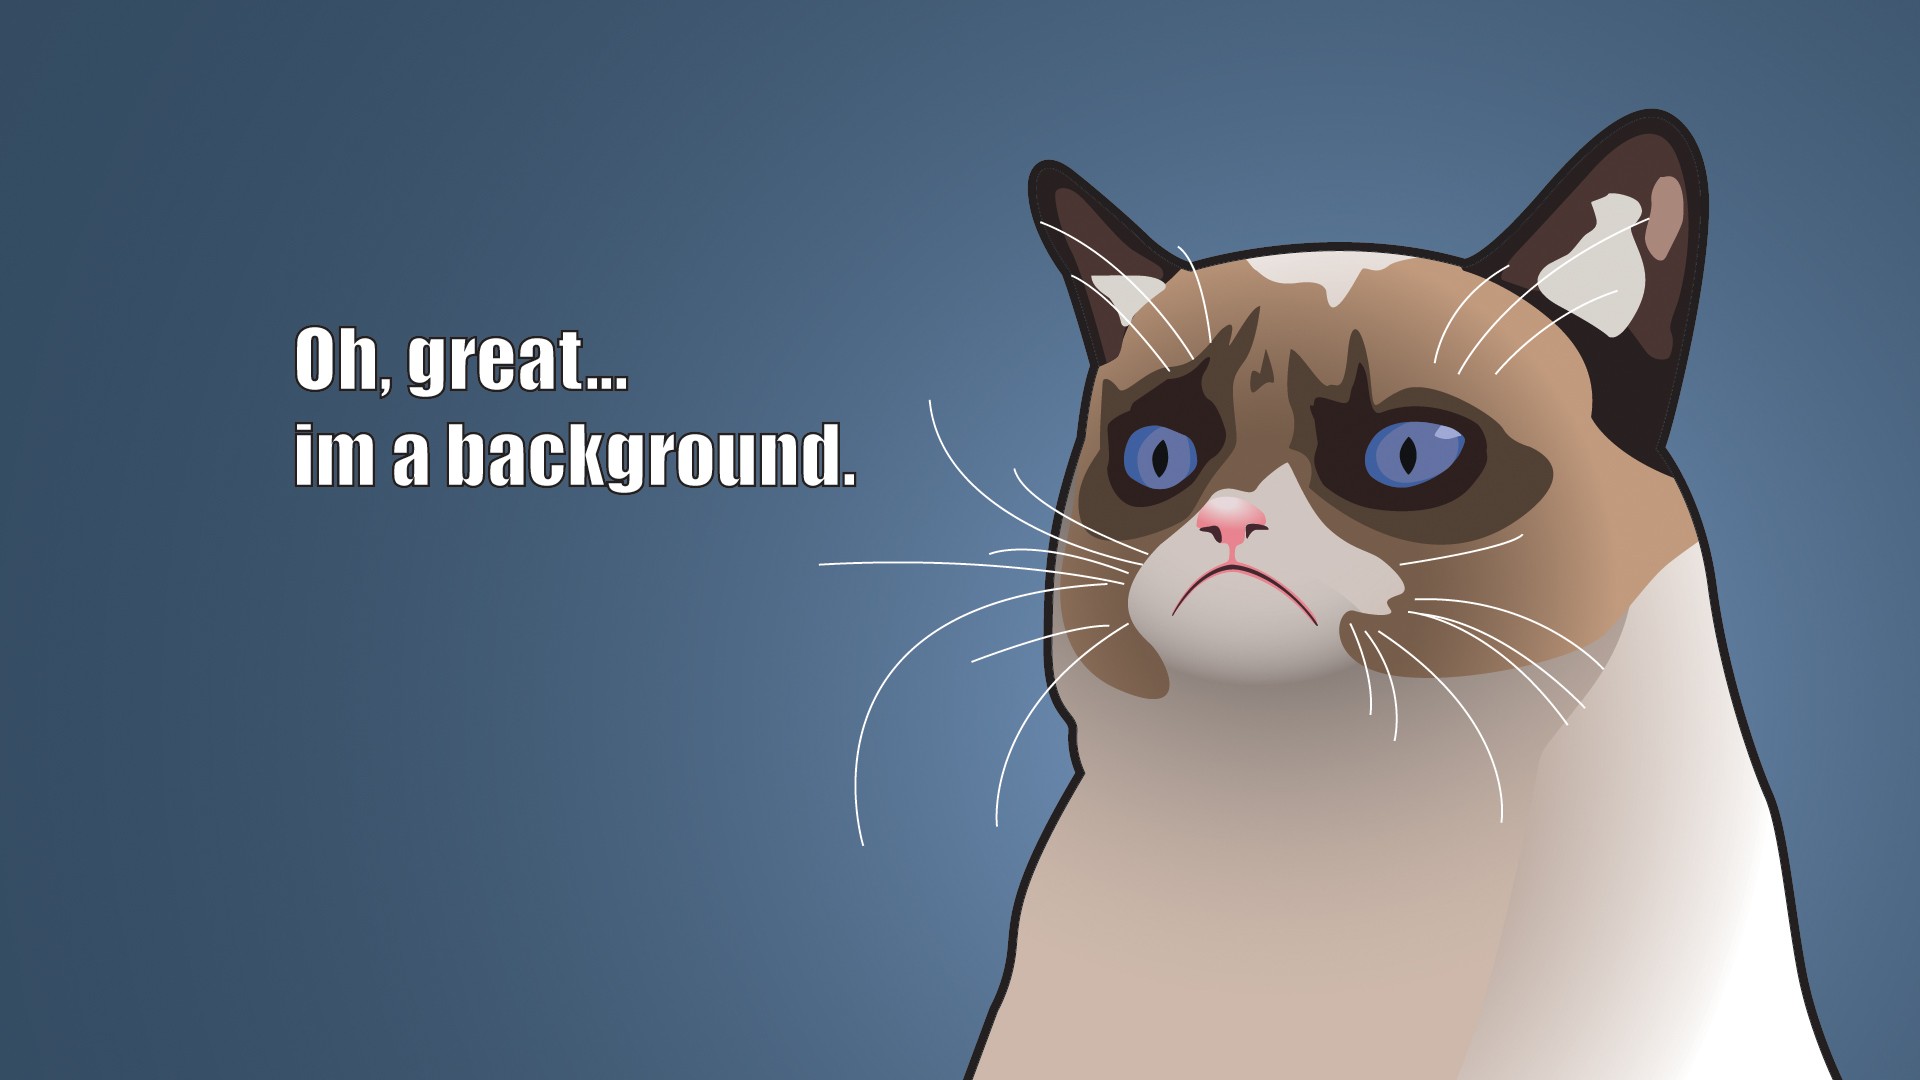 Hilarious Wallpaper For Desktop Grumpy Cat Cartoon